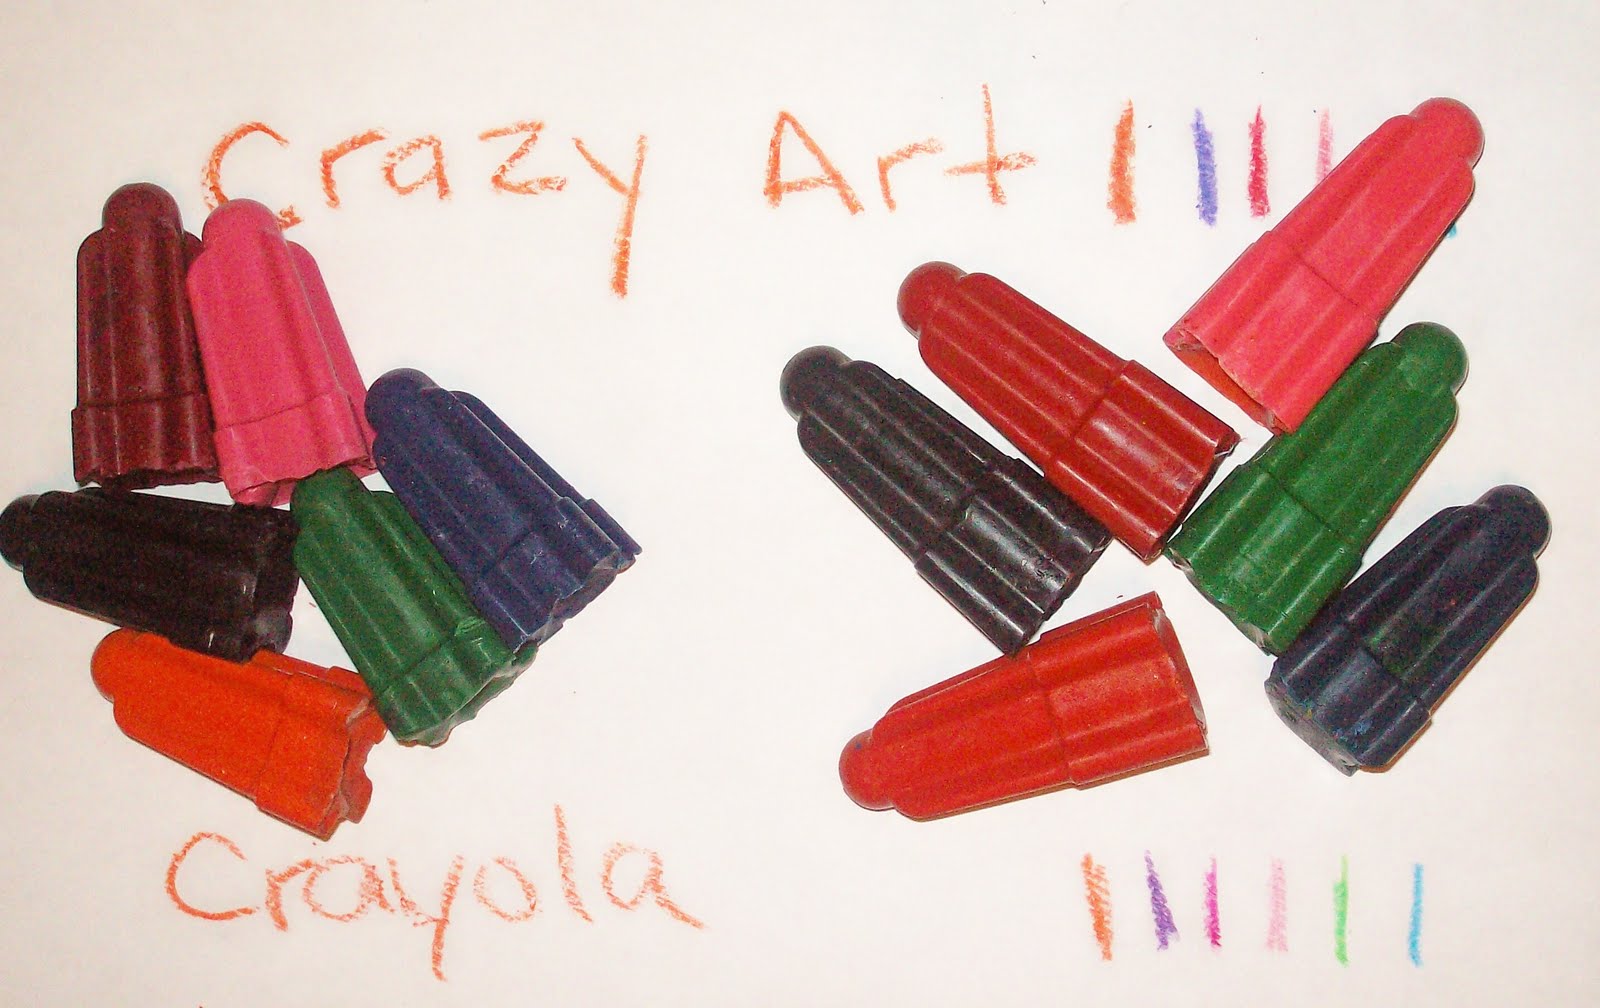 Sugar, Spice and Monkey Tales!: Crayons, Crayons, Crayons OH MY!